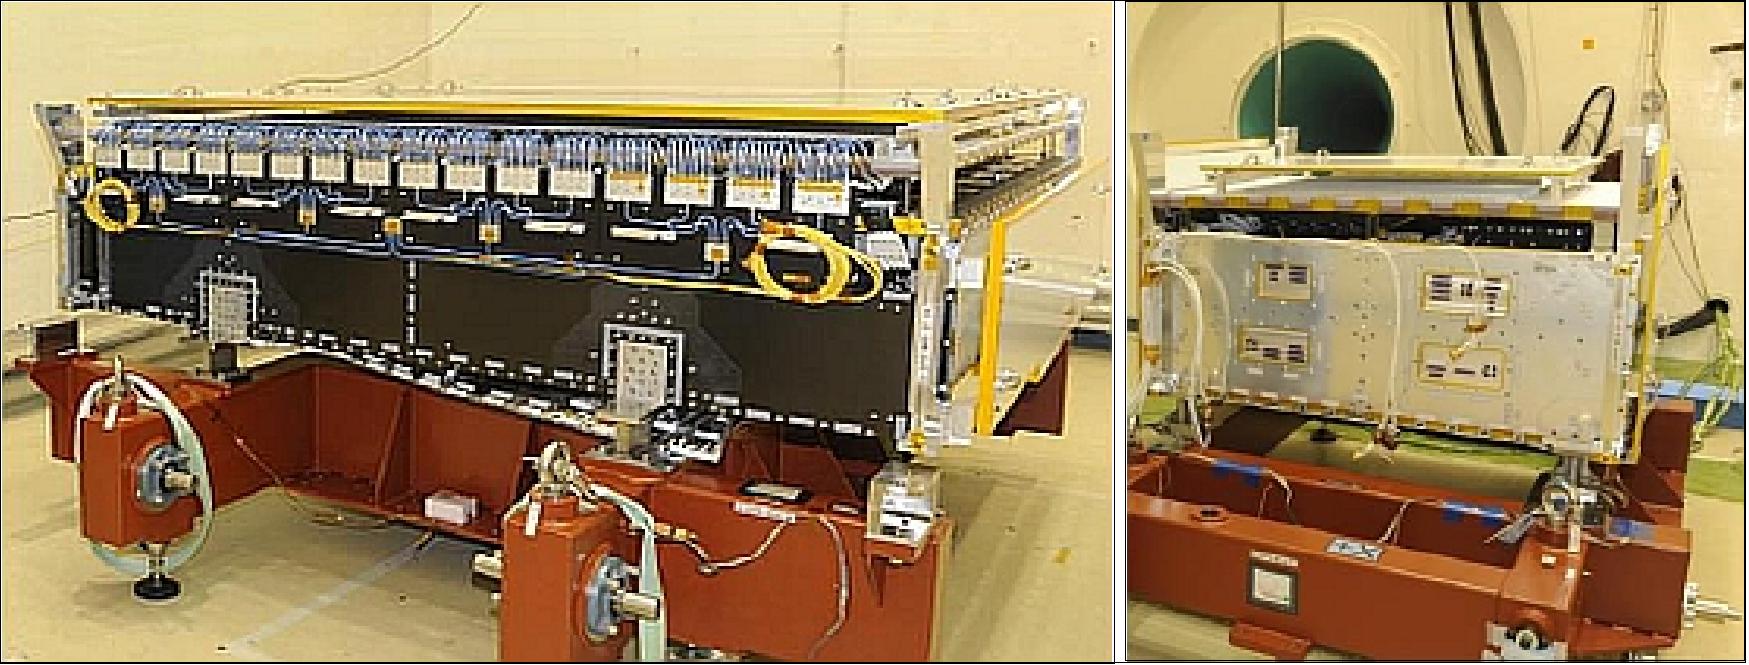 Figure 70: Photo of DPR KuPR (left) and KaPR (right) at GSFC (image credit: NASA, Ref. 28)